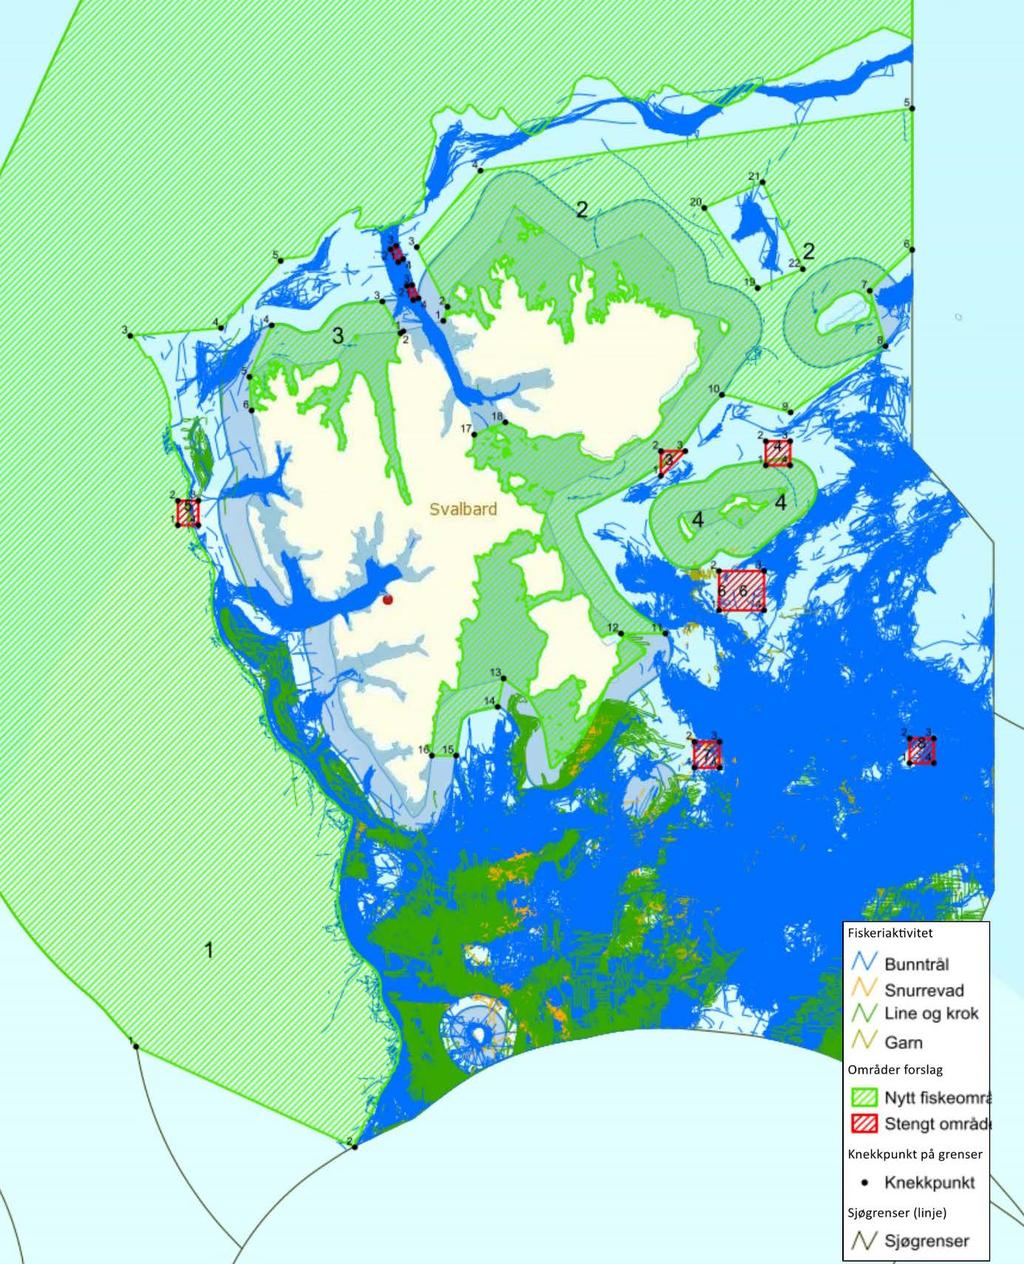 Norsk territorialfarvann kart